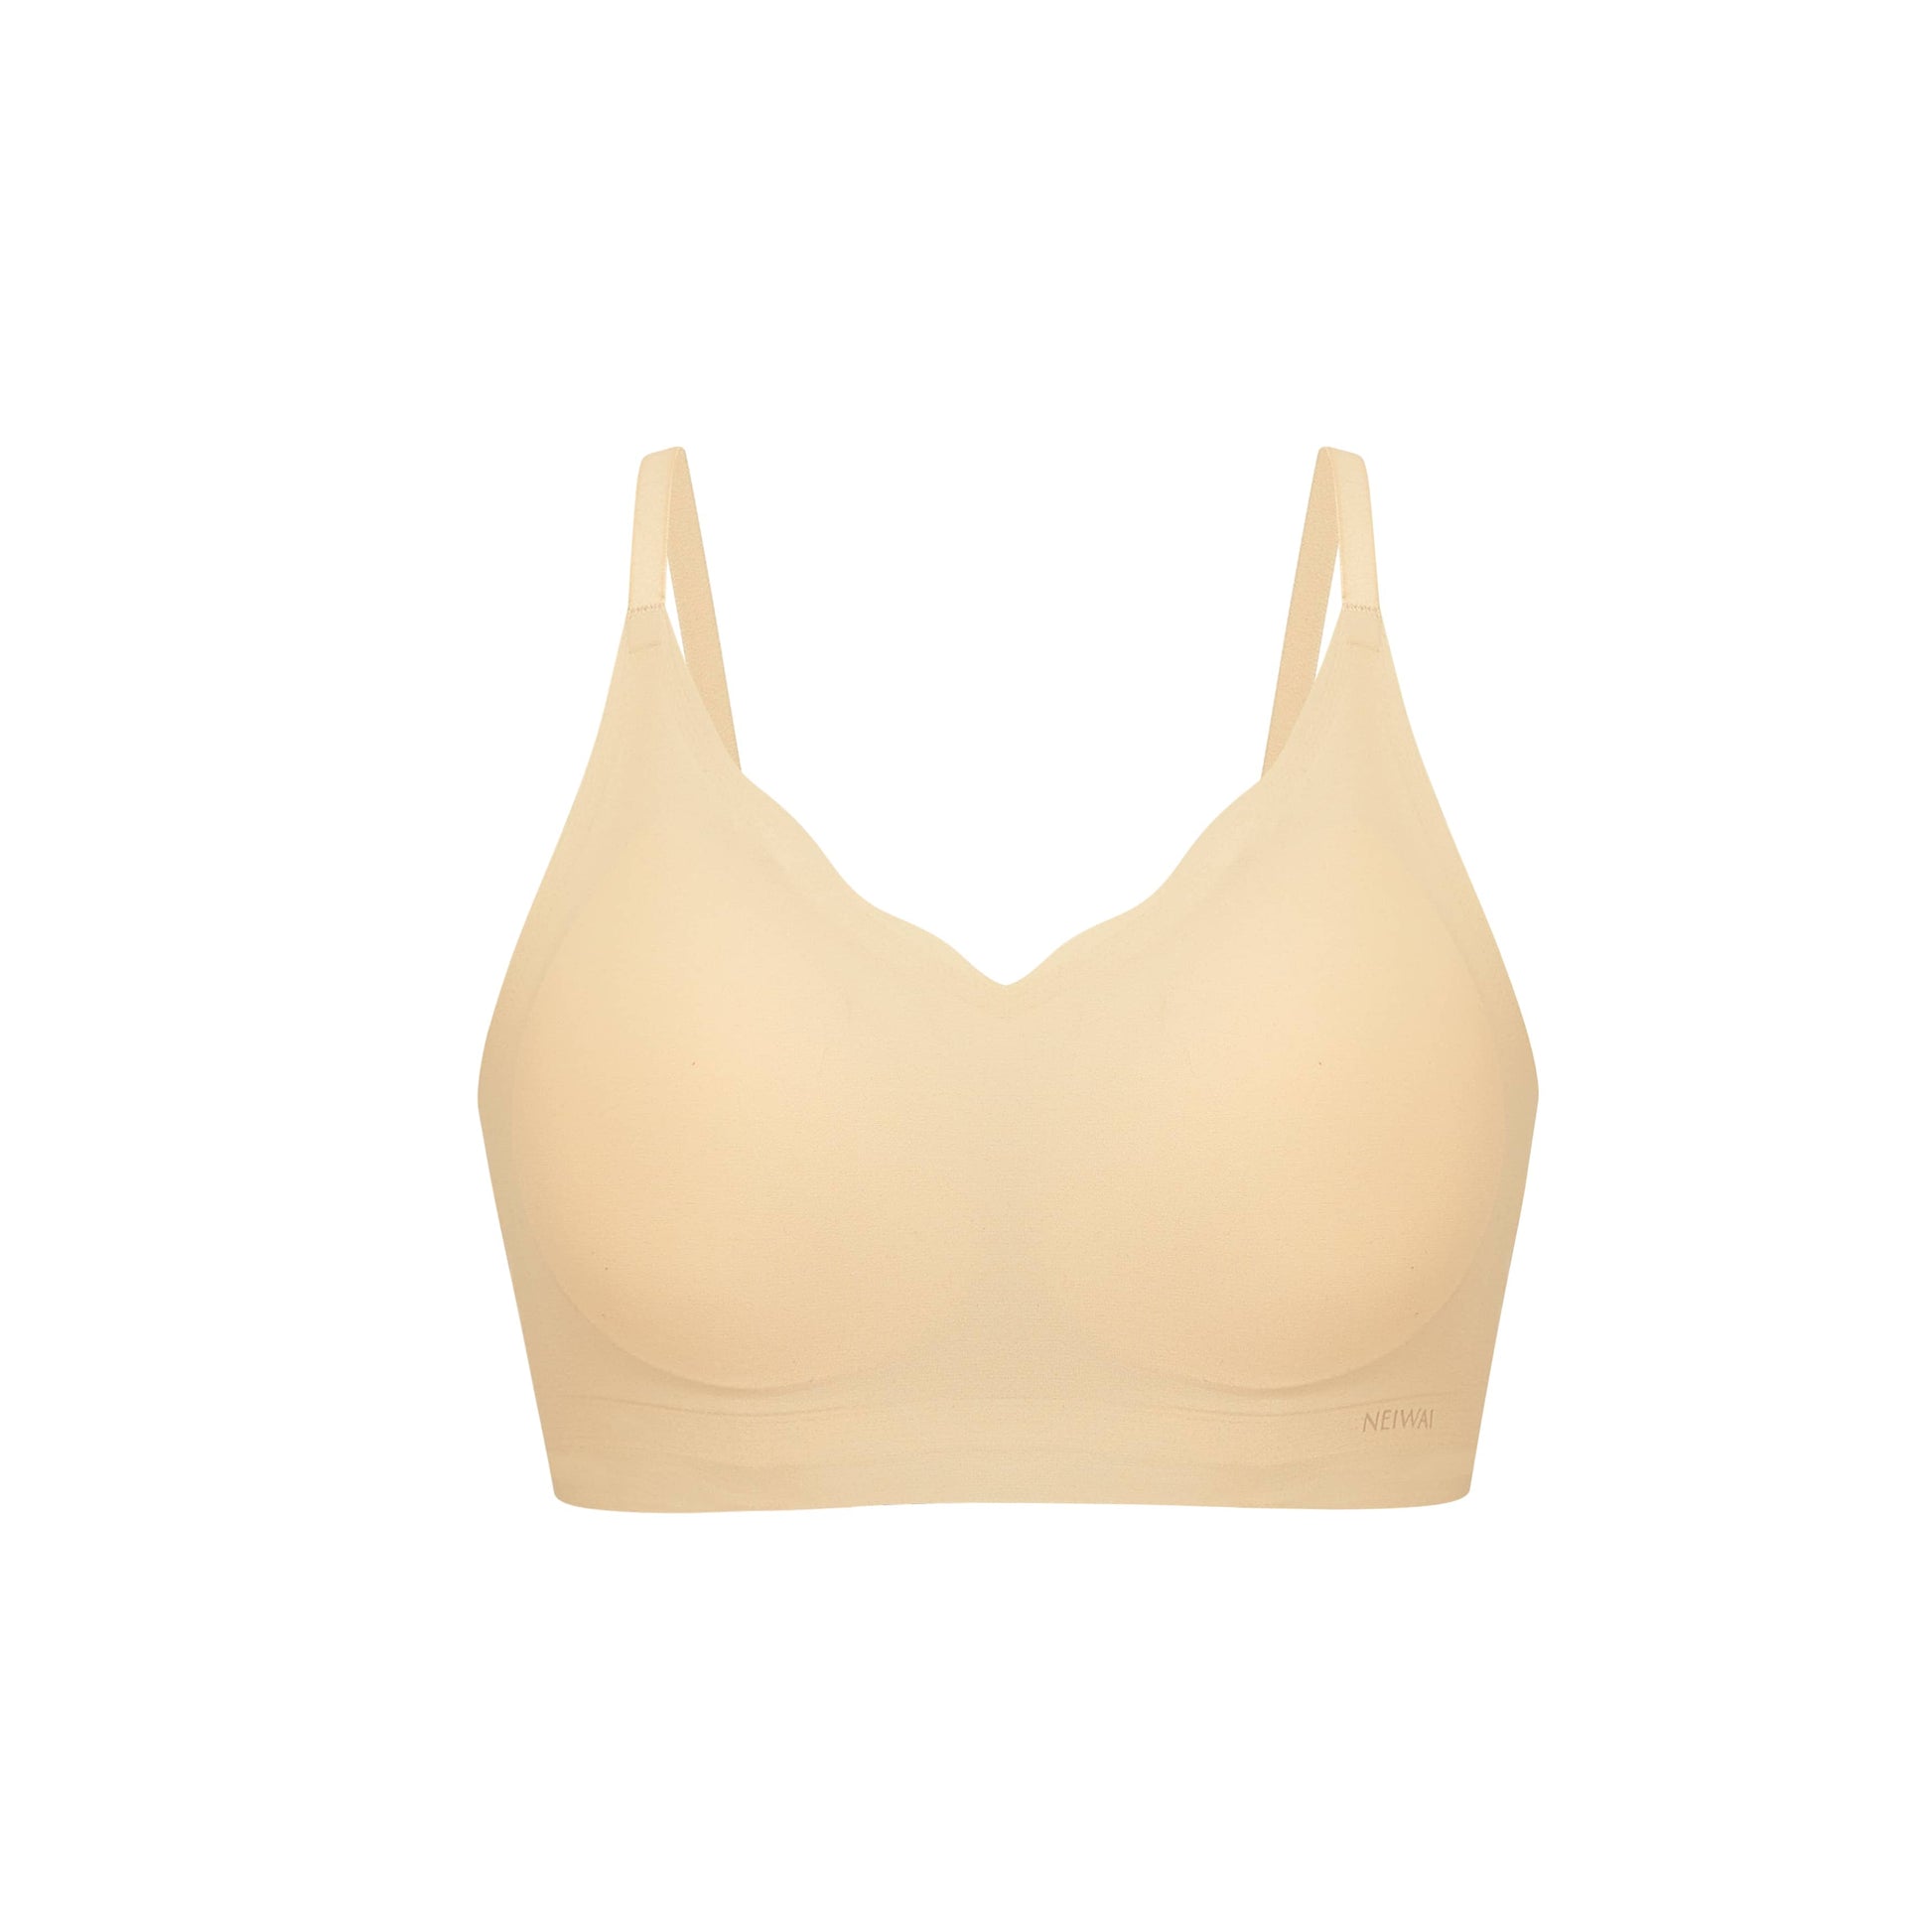 Flat lay image of beige bra